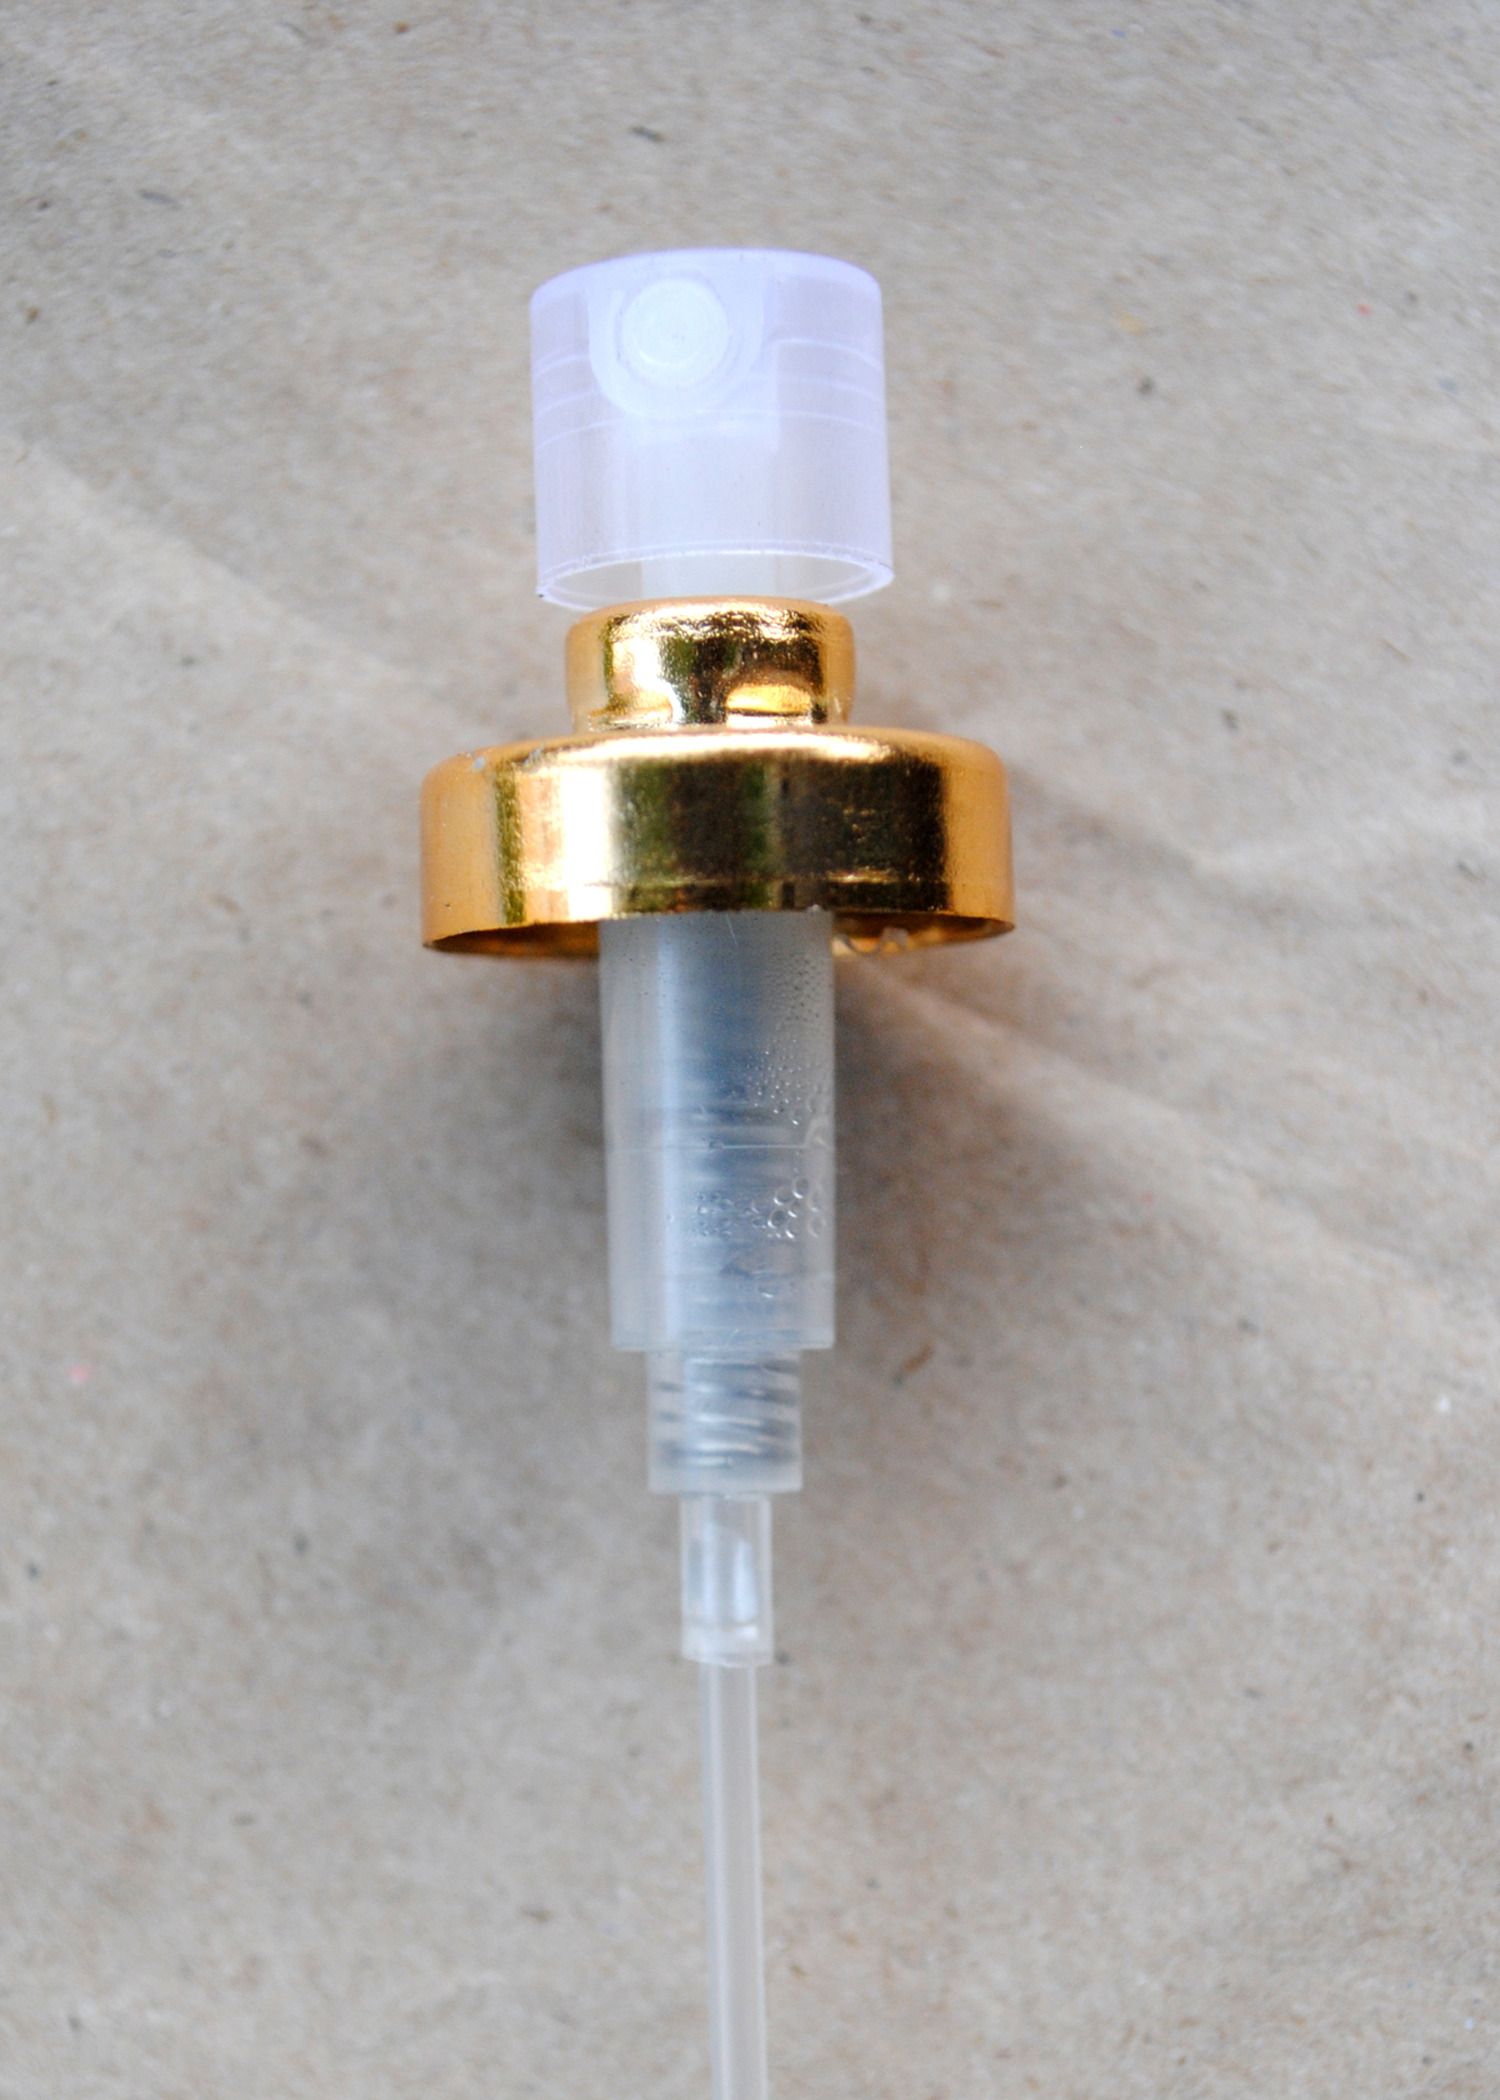 20mm plastic high dose perfume sprayer